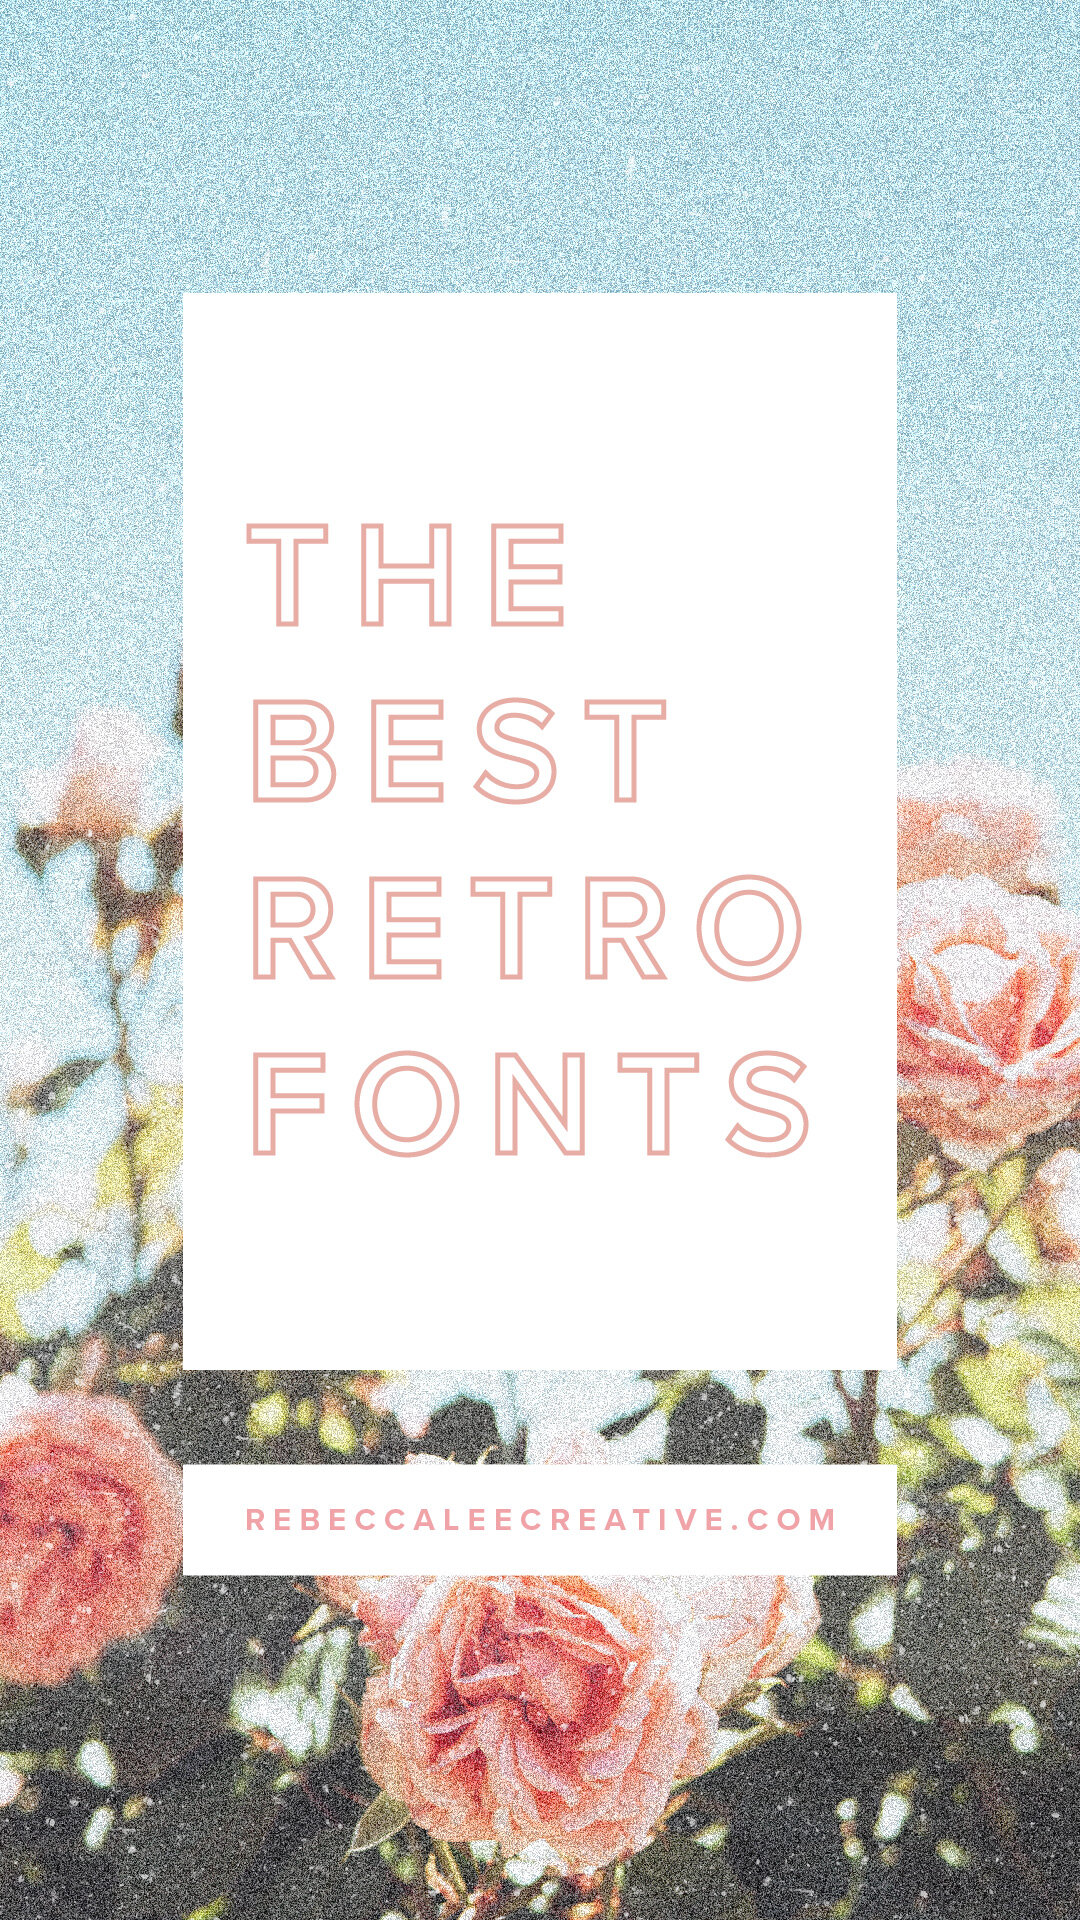 Best-retro-fonts-rebecca-lee-creative-10.jpg